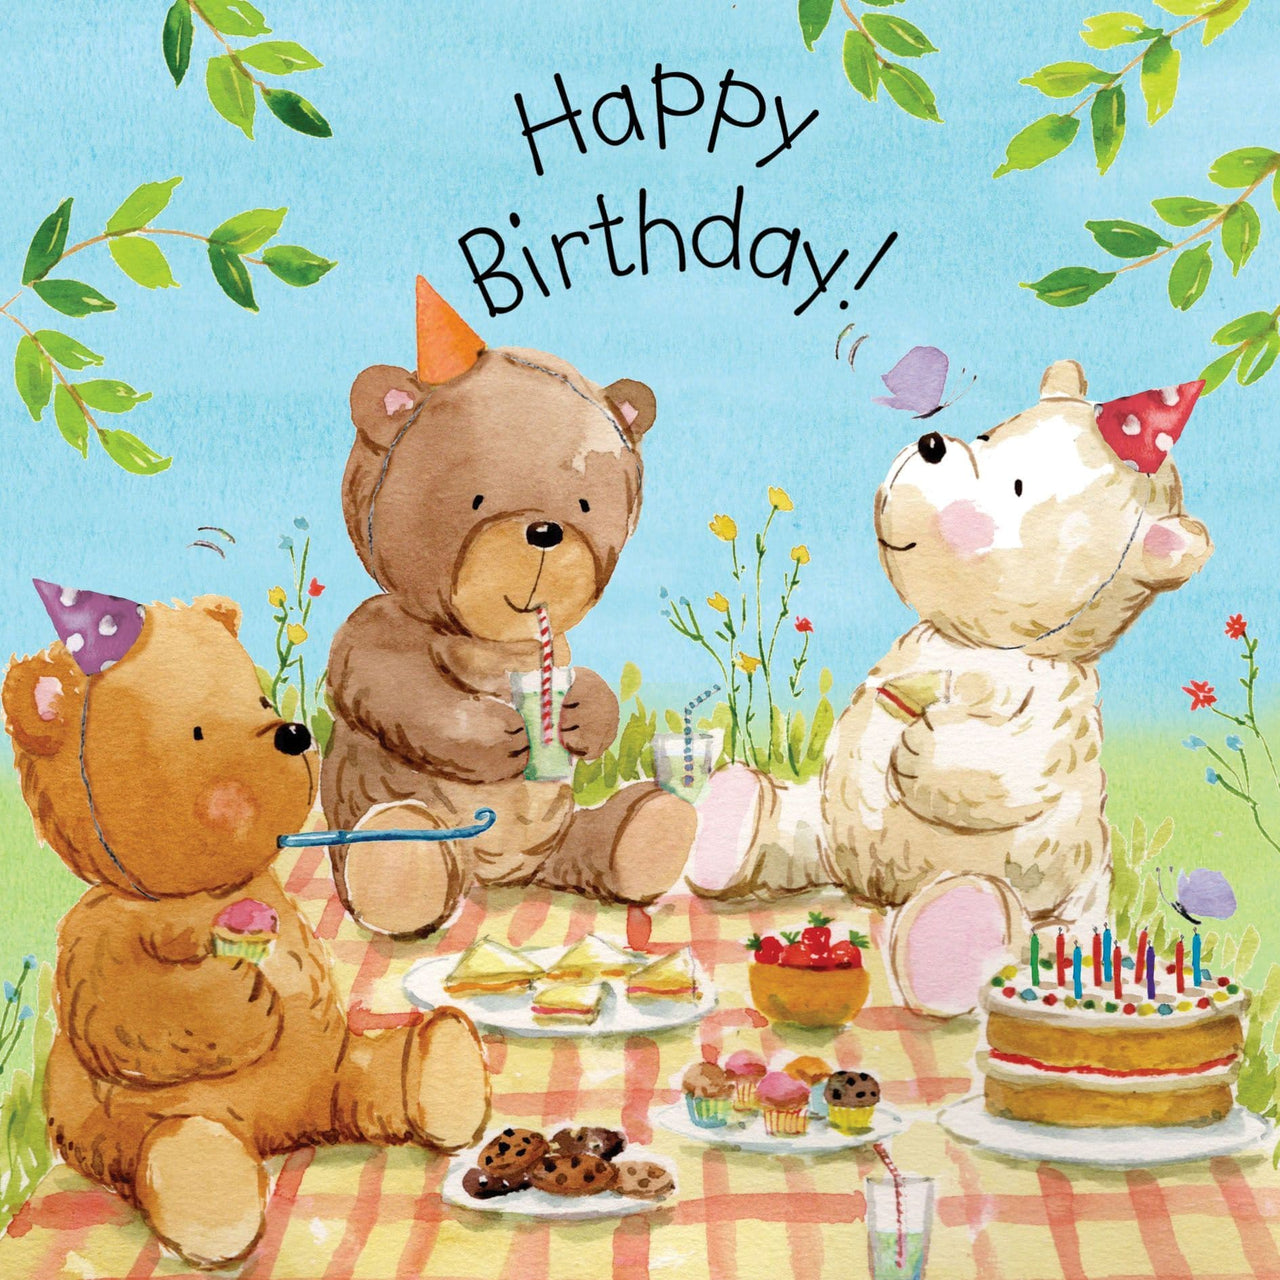 Happy Birthday Teddy Bear's Picnic Birthday Card